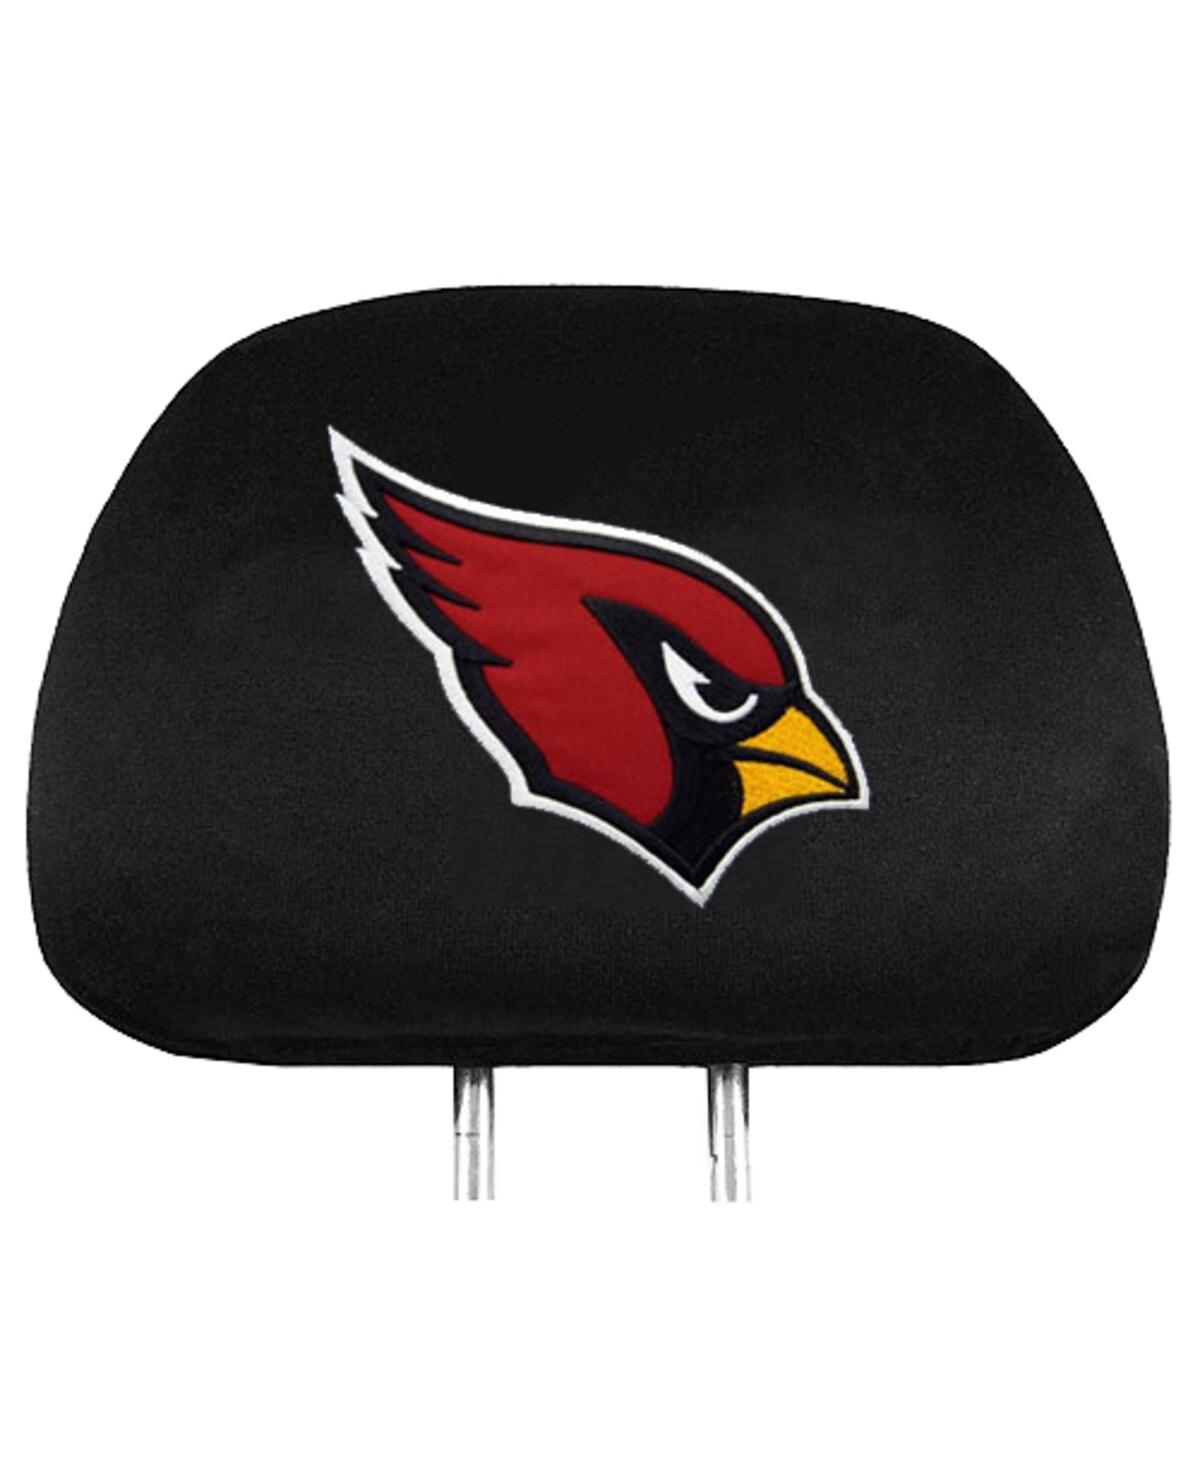 Pro Mark Arizona Cardinals 2-Pack Headrest Covers - Black